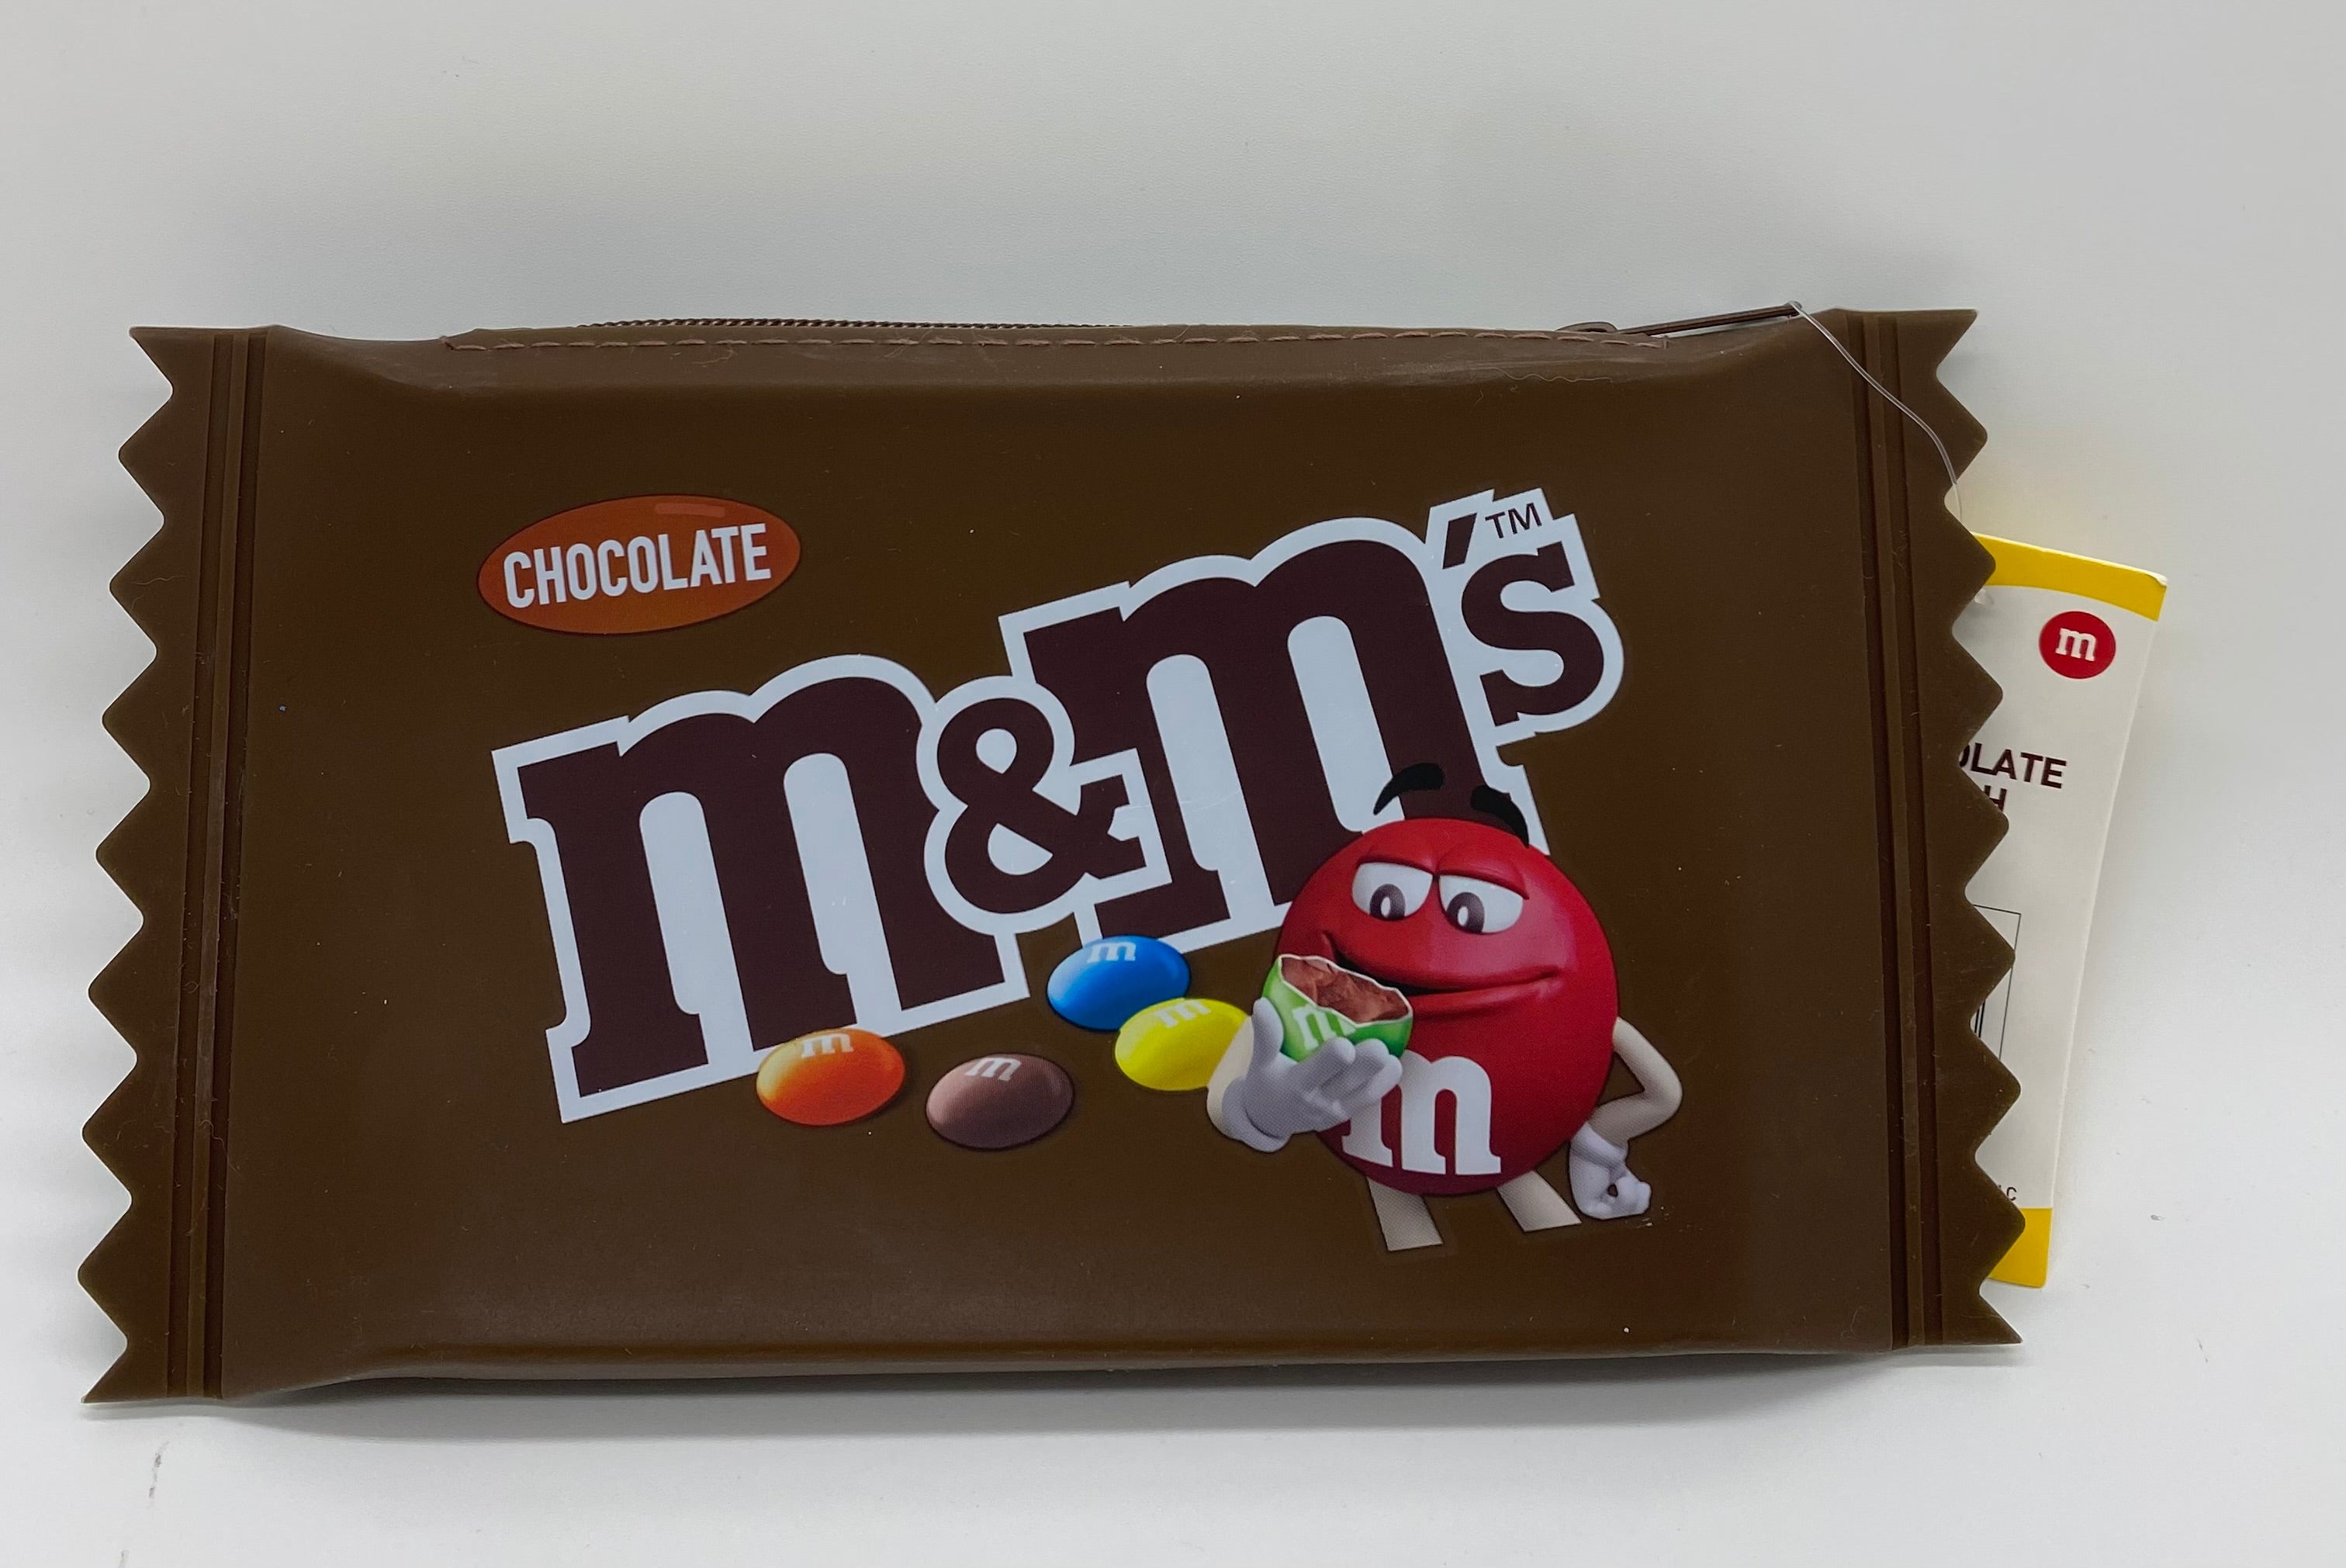 Brown Milk Chocolate M&M's Candy (5 Pound Bag)